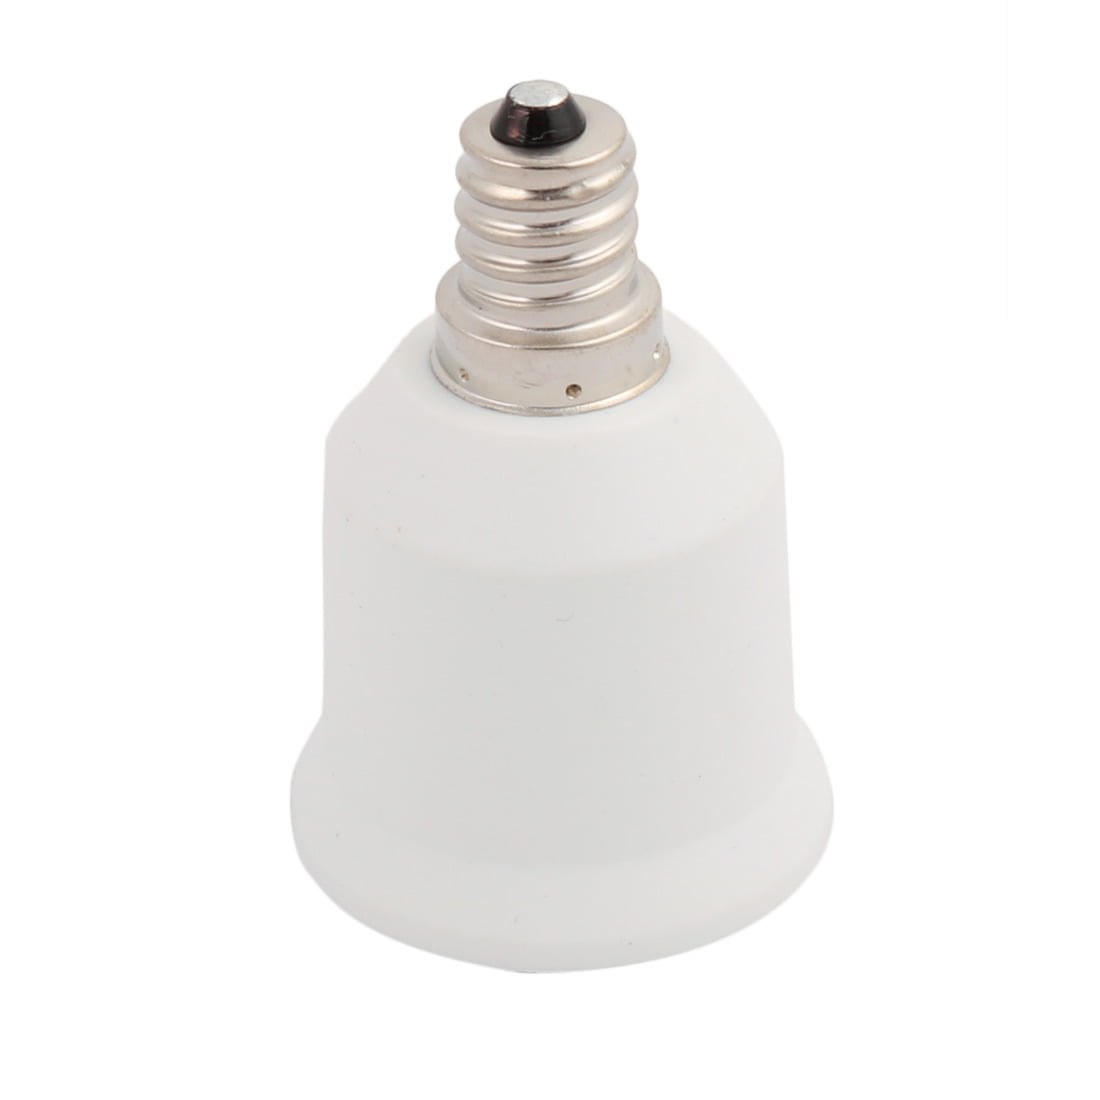 Aexit 7 Pcs Lighting fixtures and controls E12 to E26/E27 LED Bulb Base Adapter Converter Light Socket Lamp Holder 